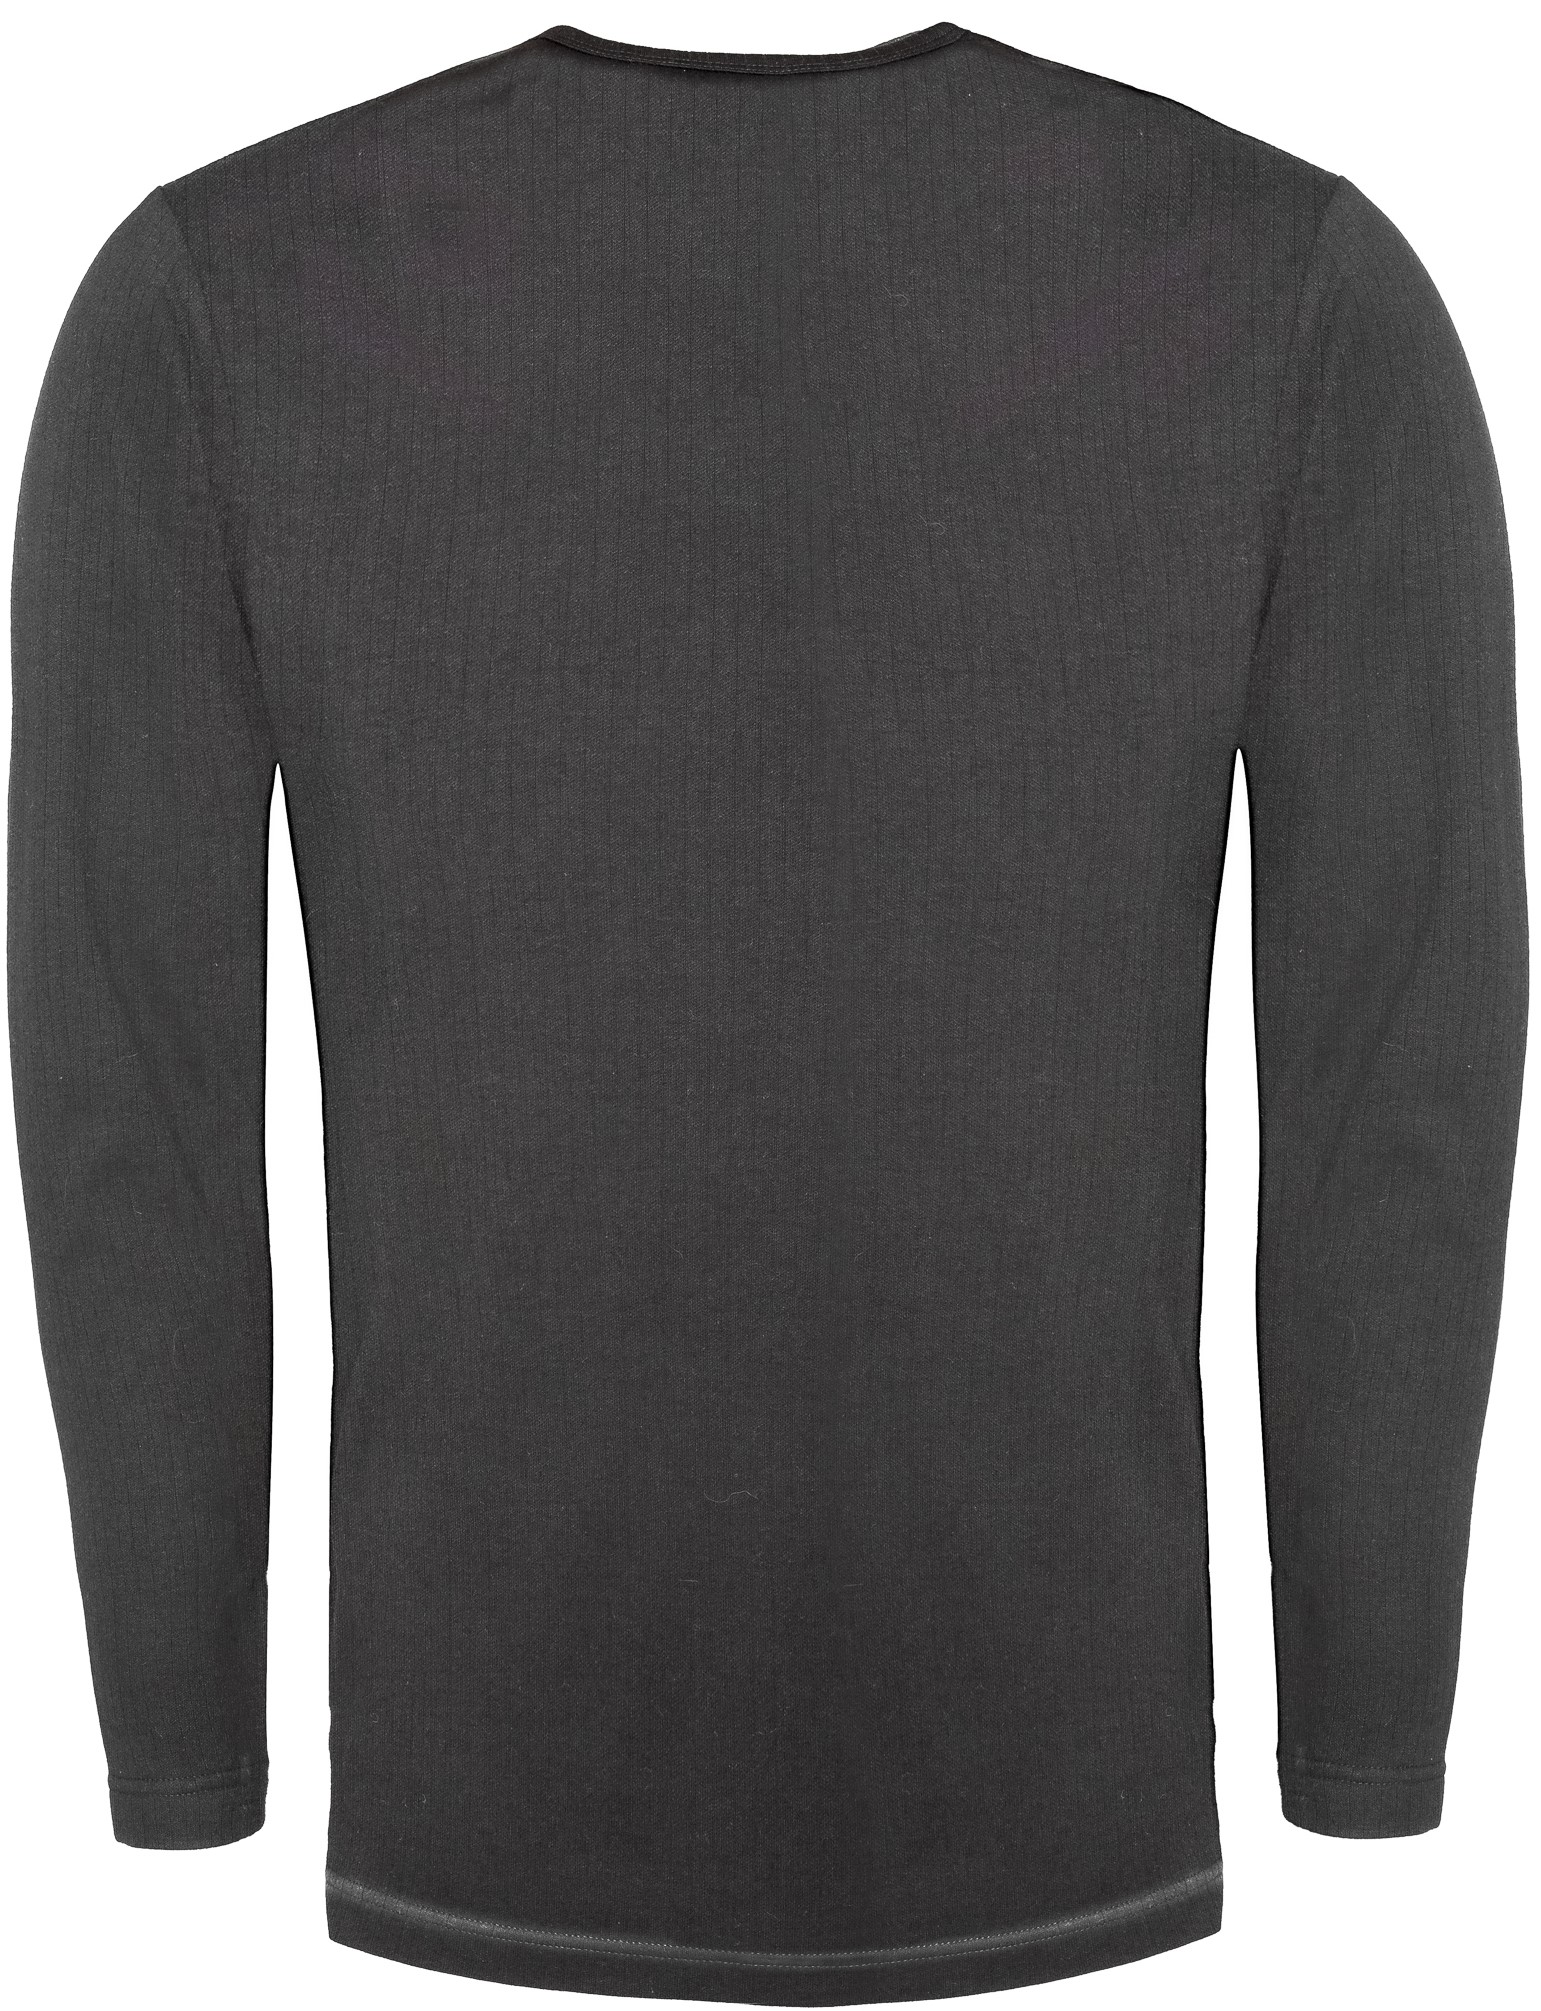 Bigdude Long Sleeve Thermal T-Shirt Charcoal | BigDude